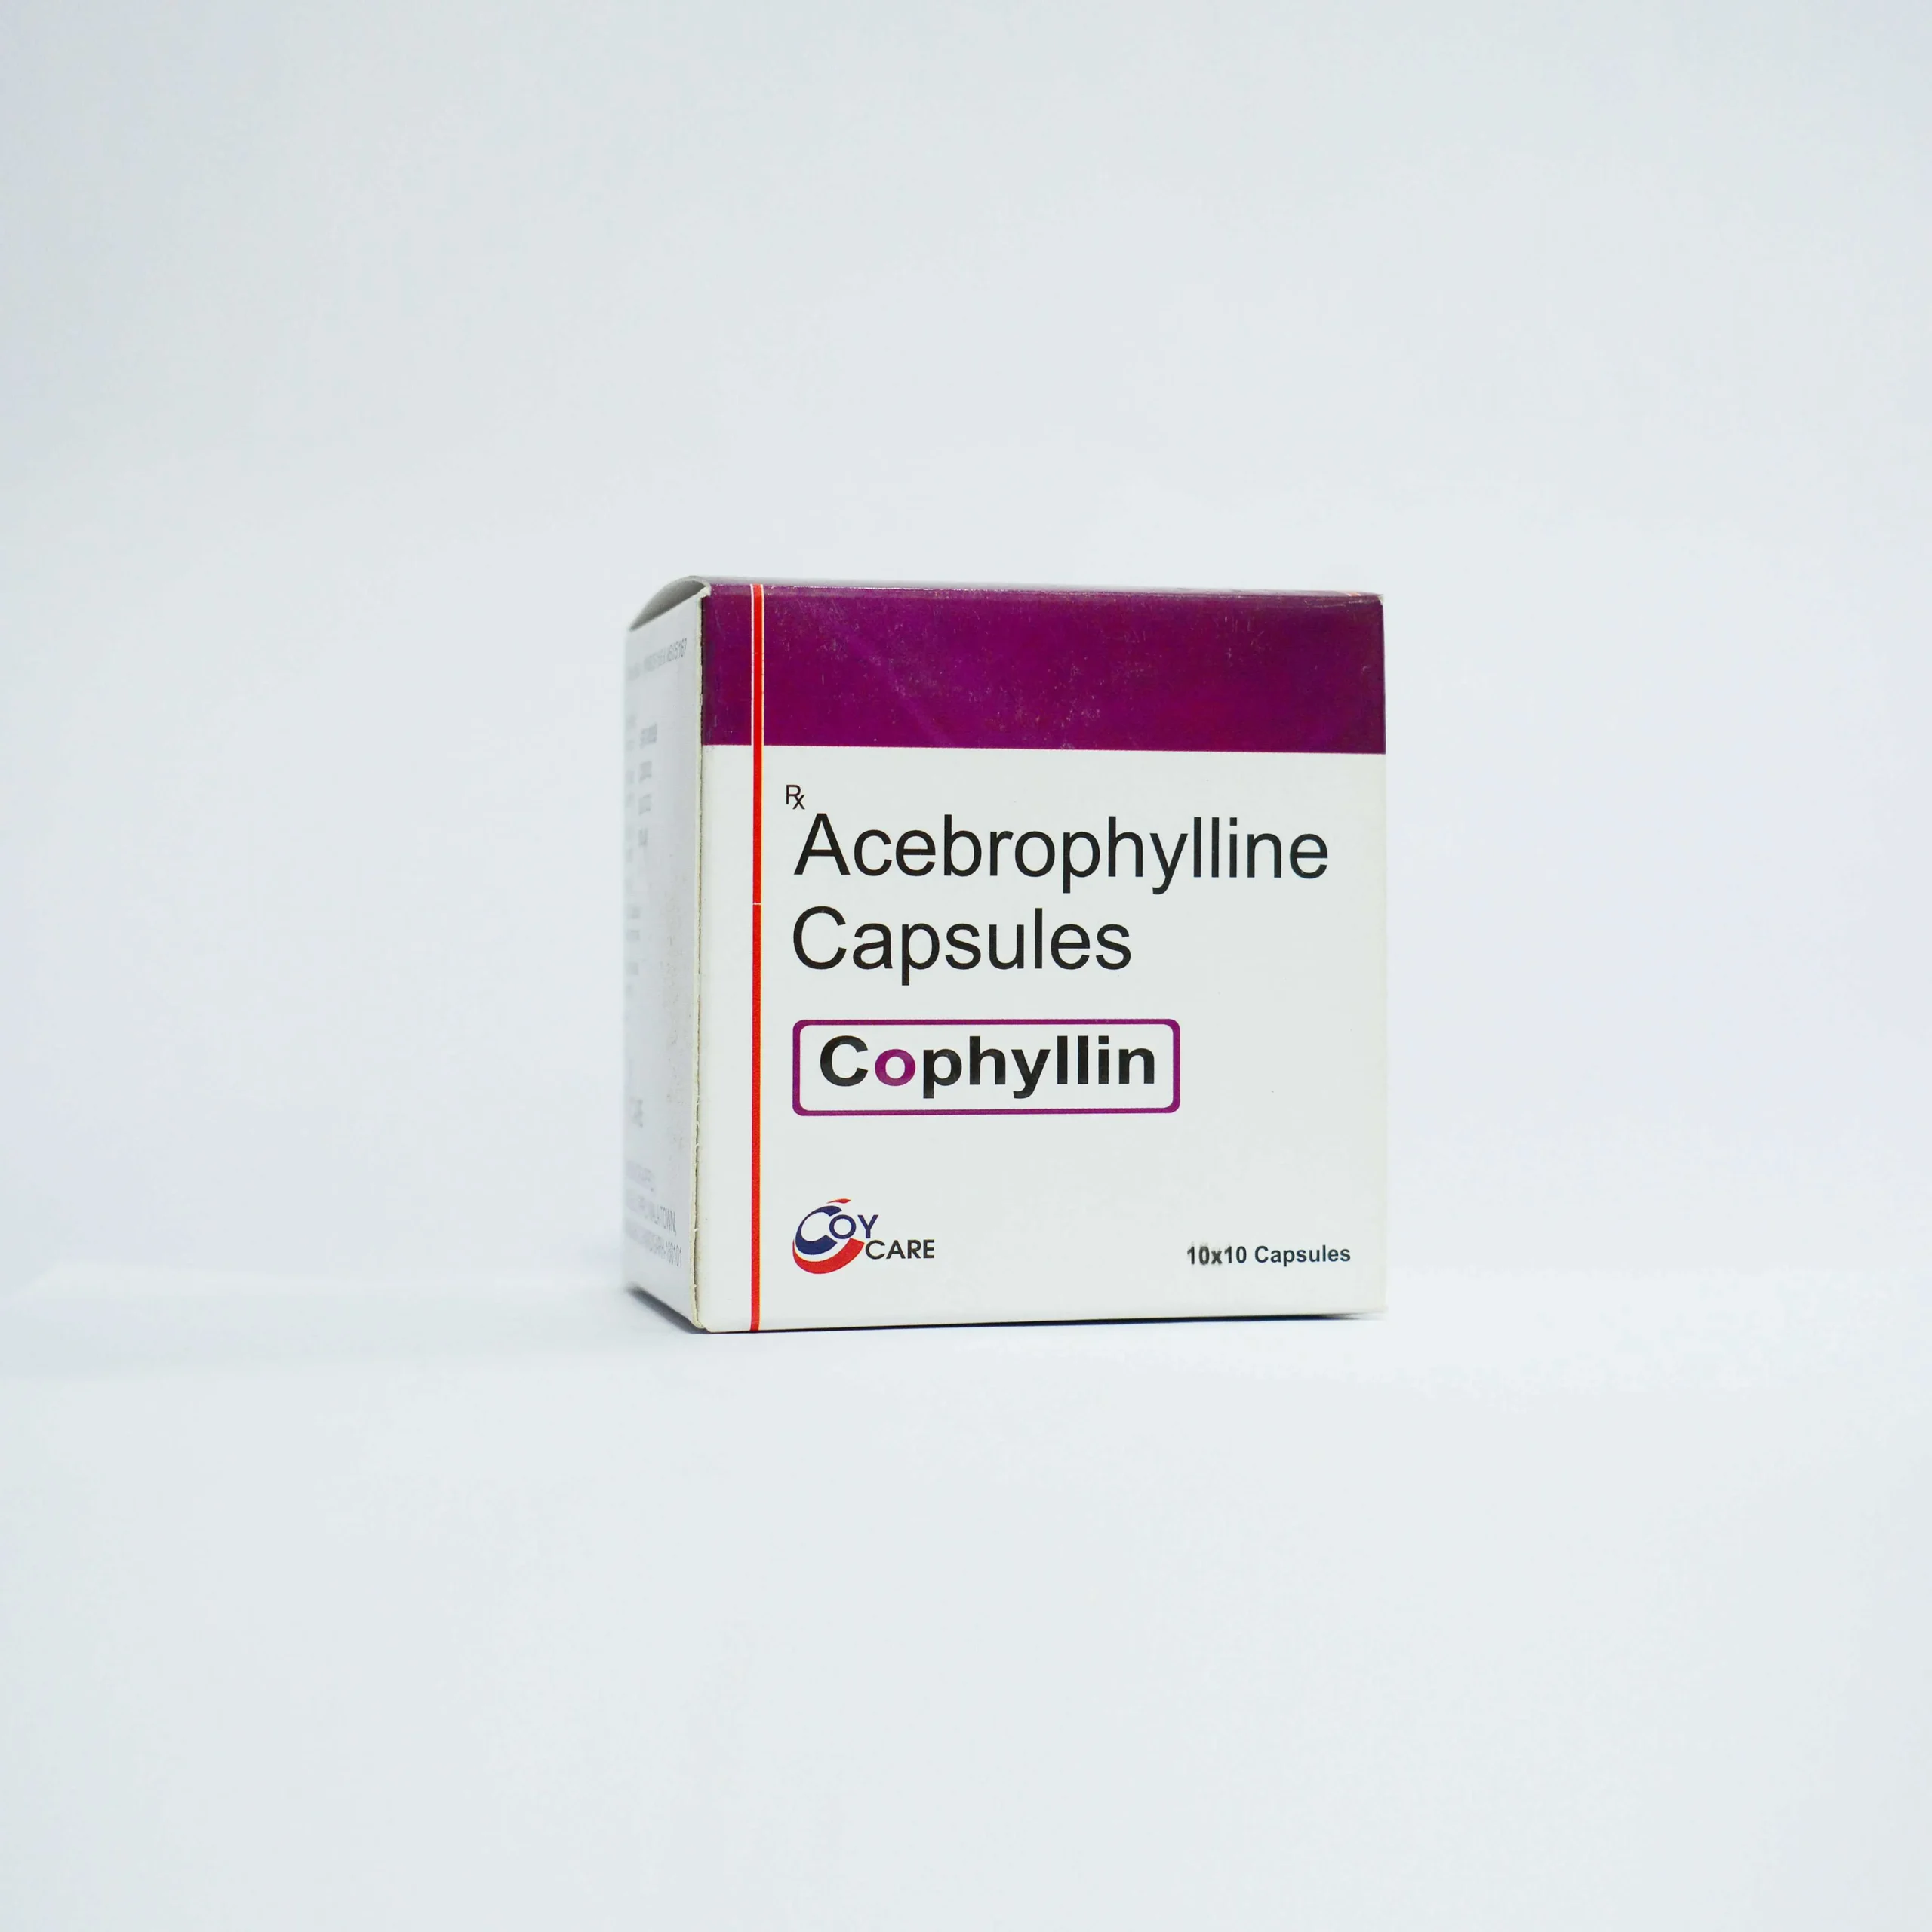 Cophyllin